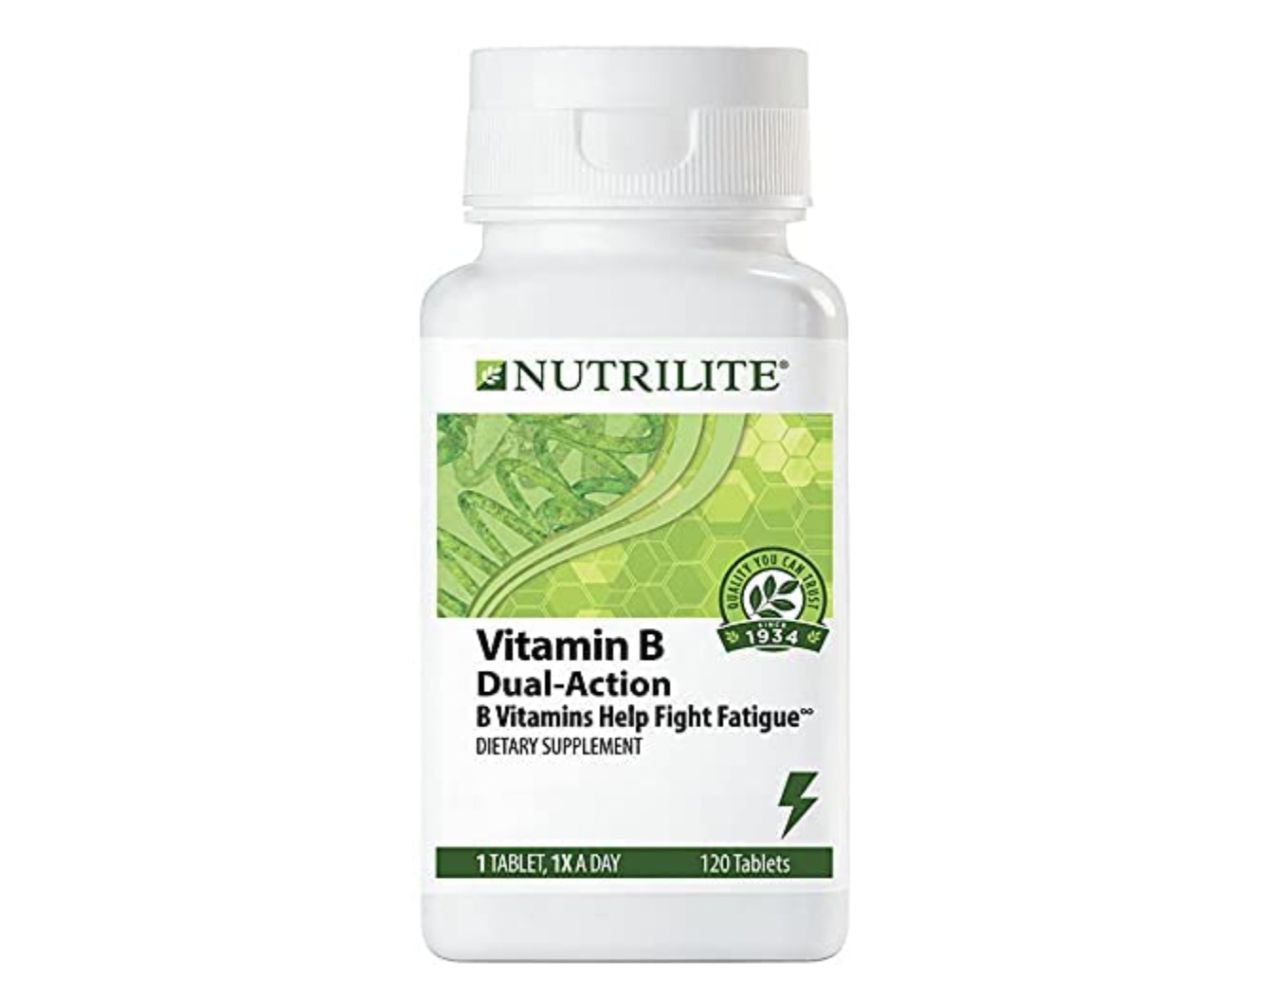 Nutrilite Vitamine B Dual Action